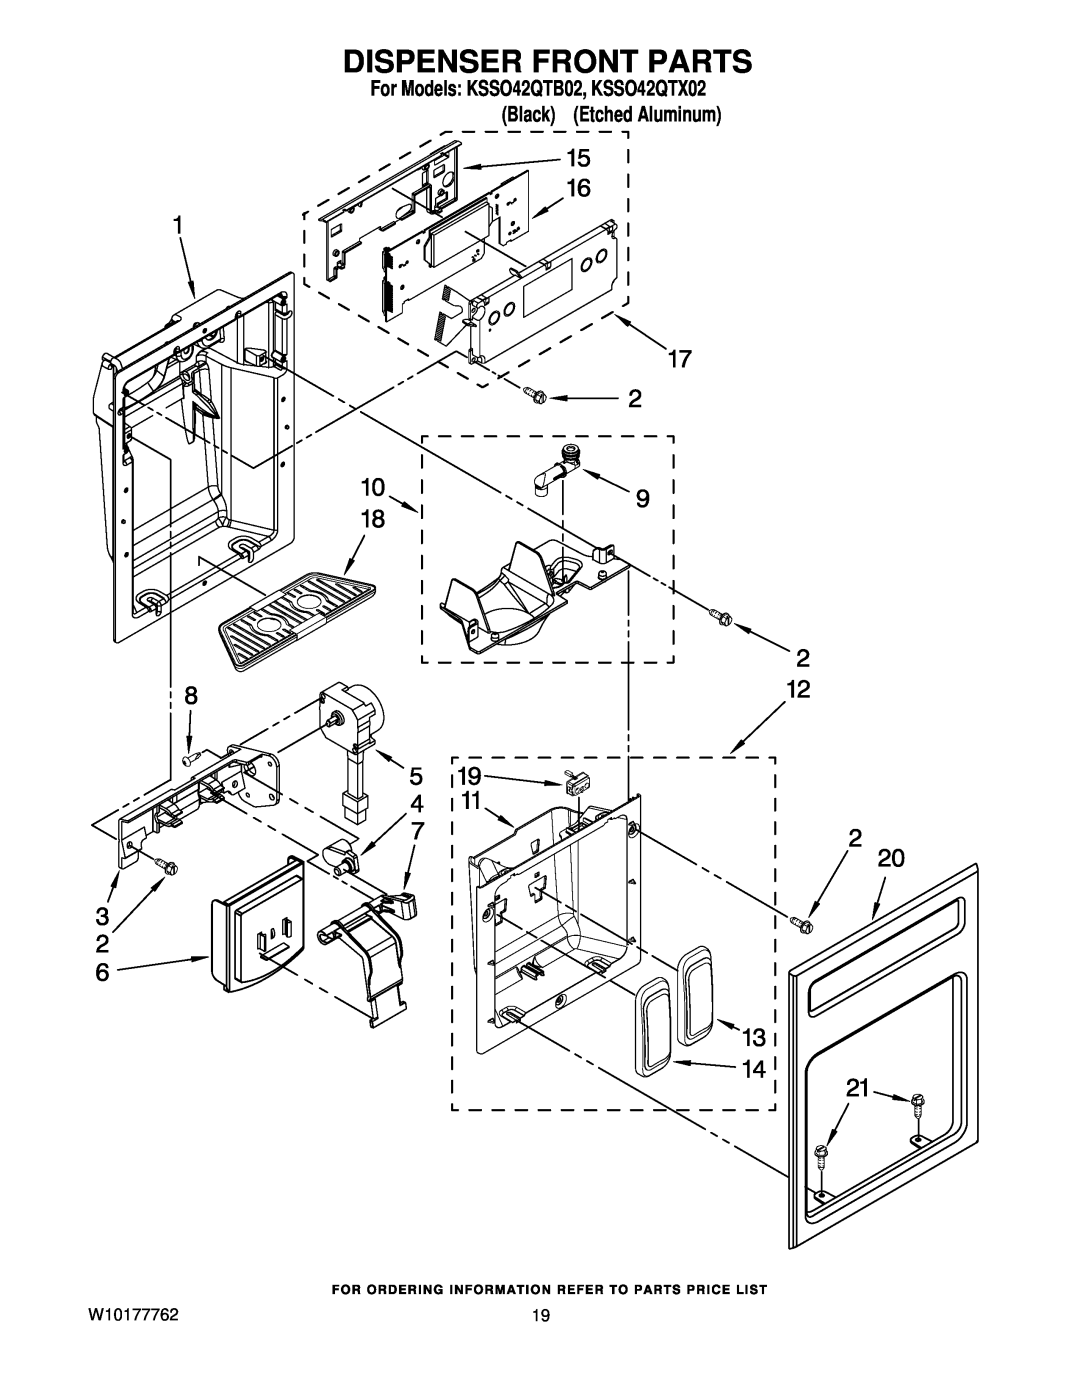 KitchenAid manual Dispenser Front Parts, W10177762, For Models KSSO42QTB02, KSSO42QTX02 Black Etched Aluminum 